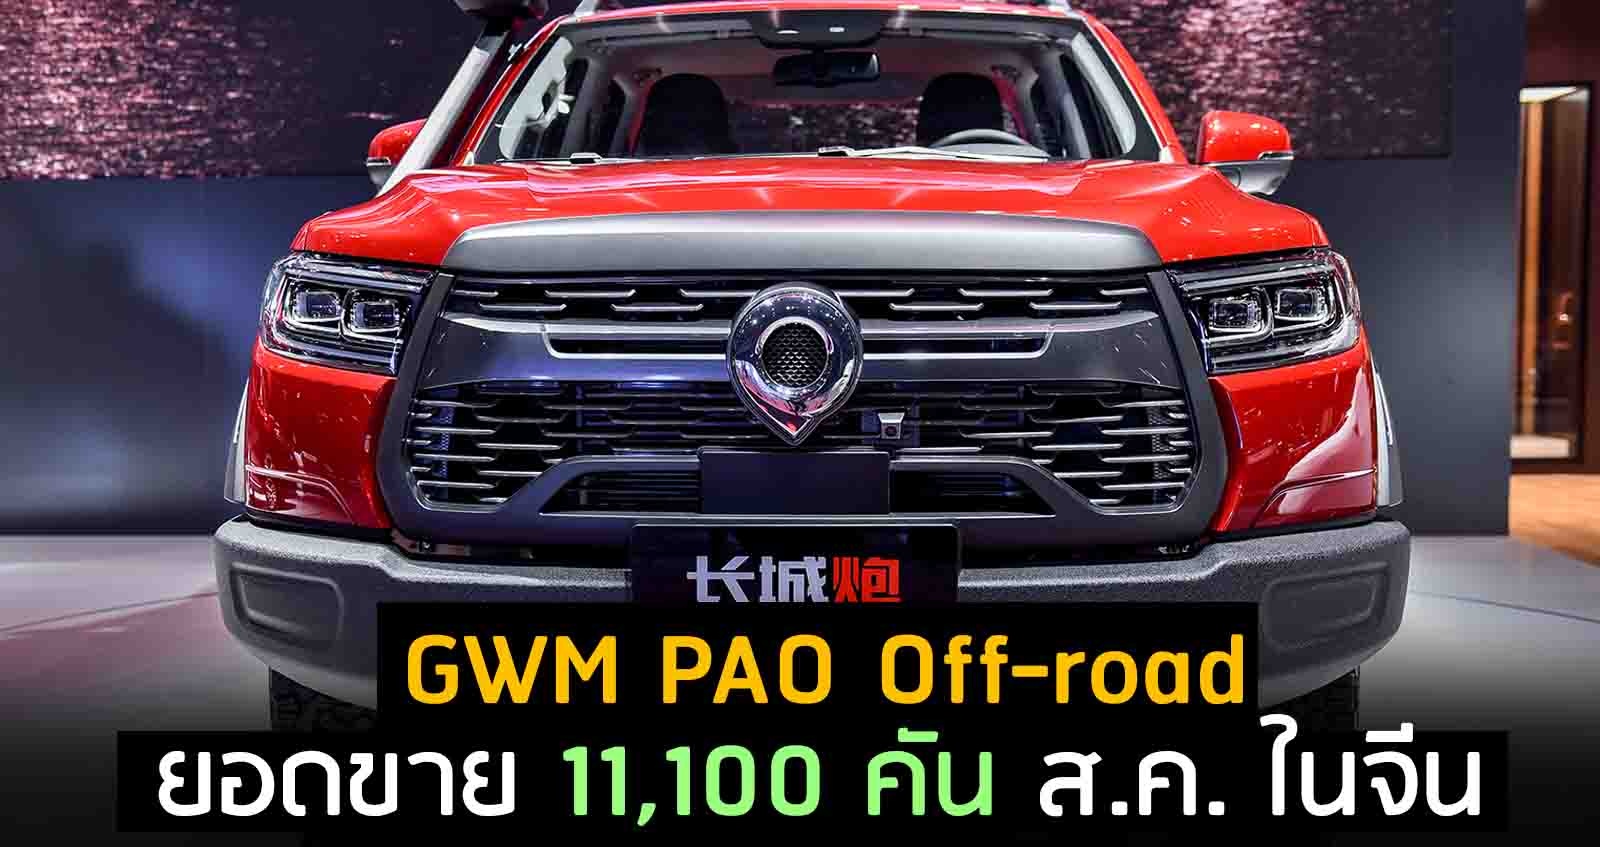 GWM PAO Off-road ยอดขาย 11,100 คัน สิงหาคม ในจีน